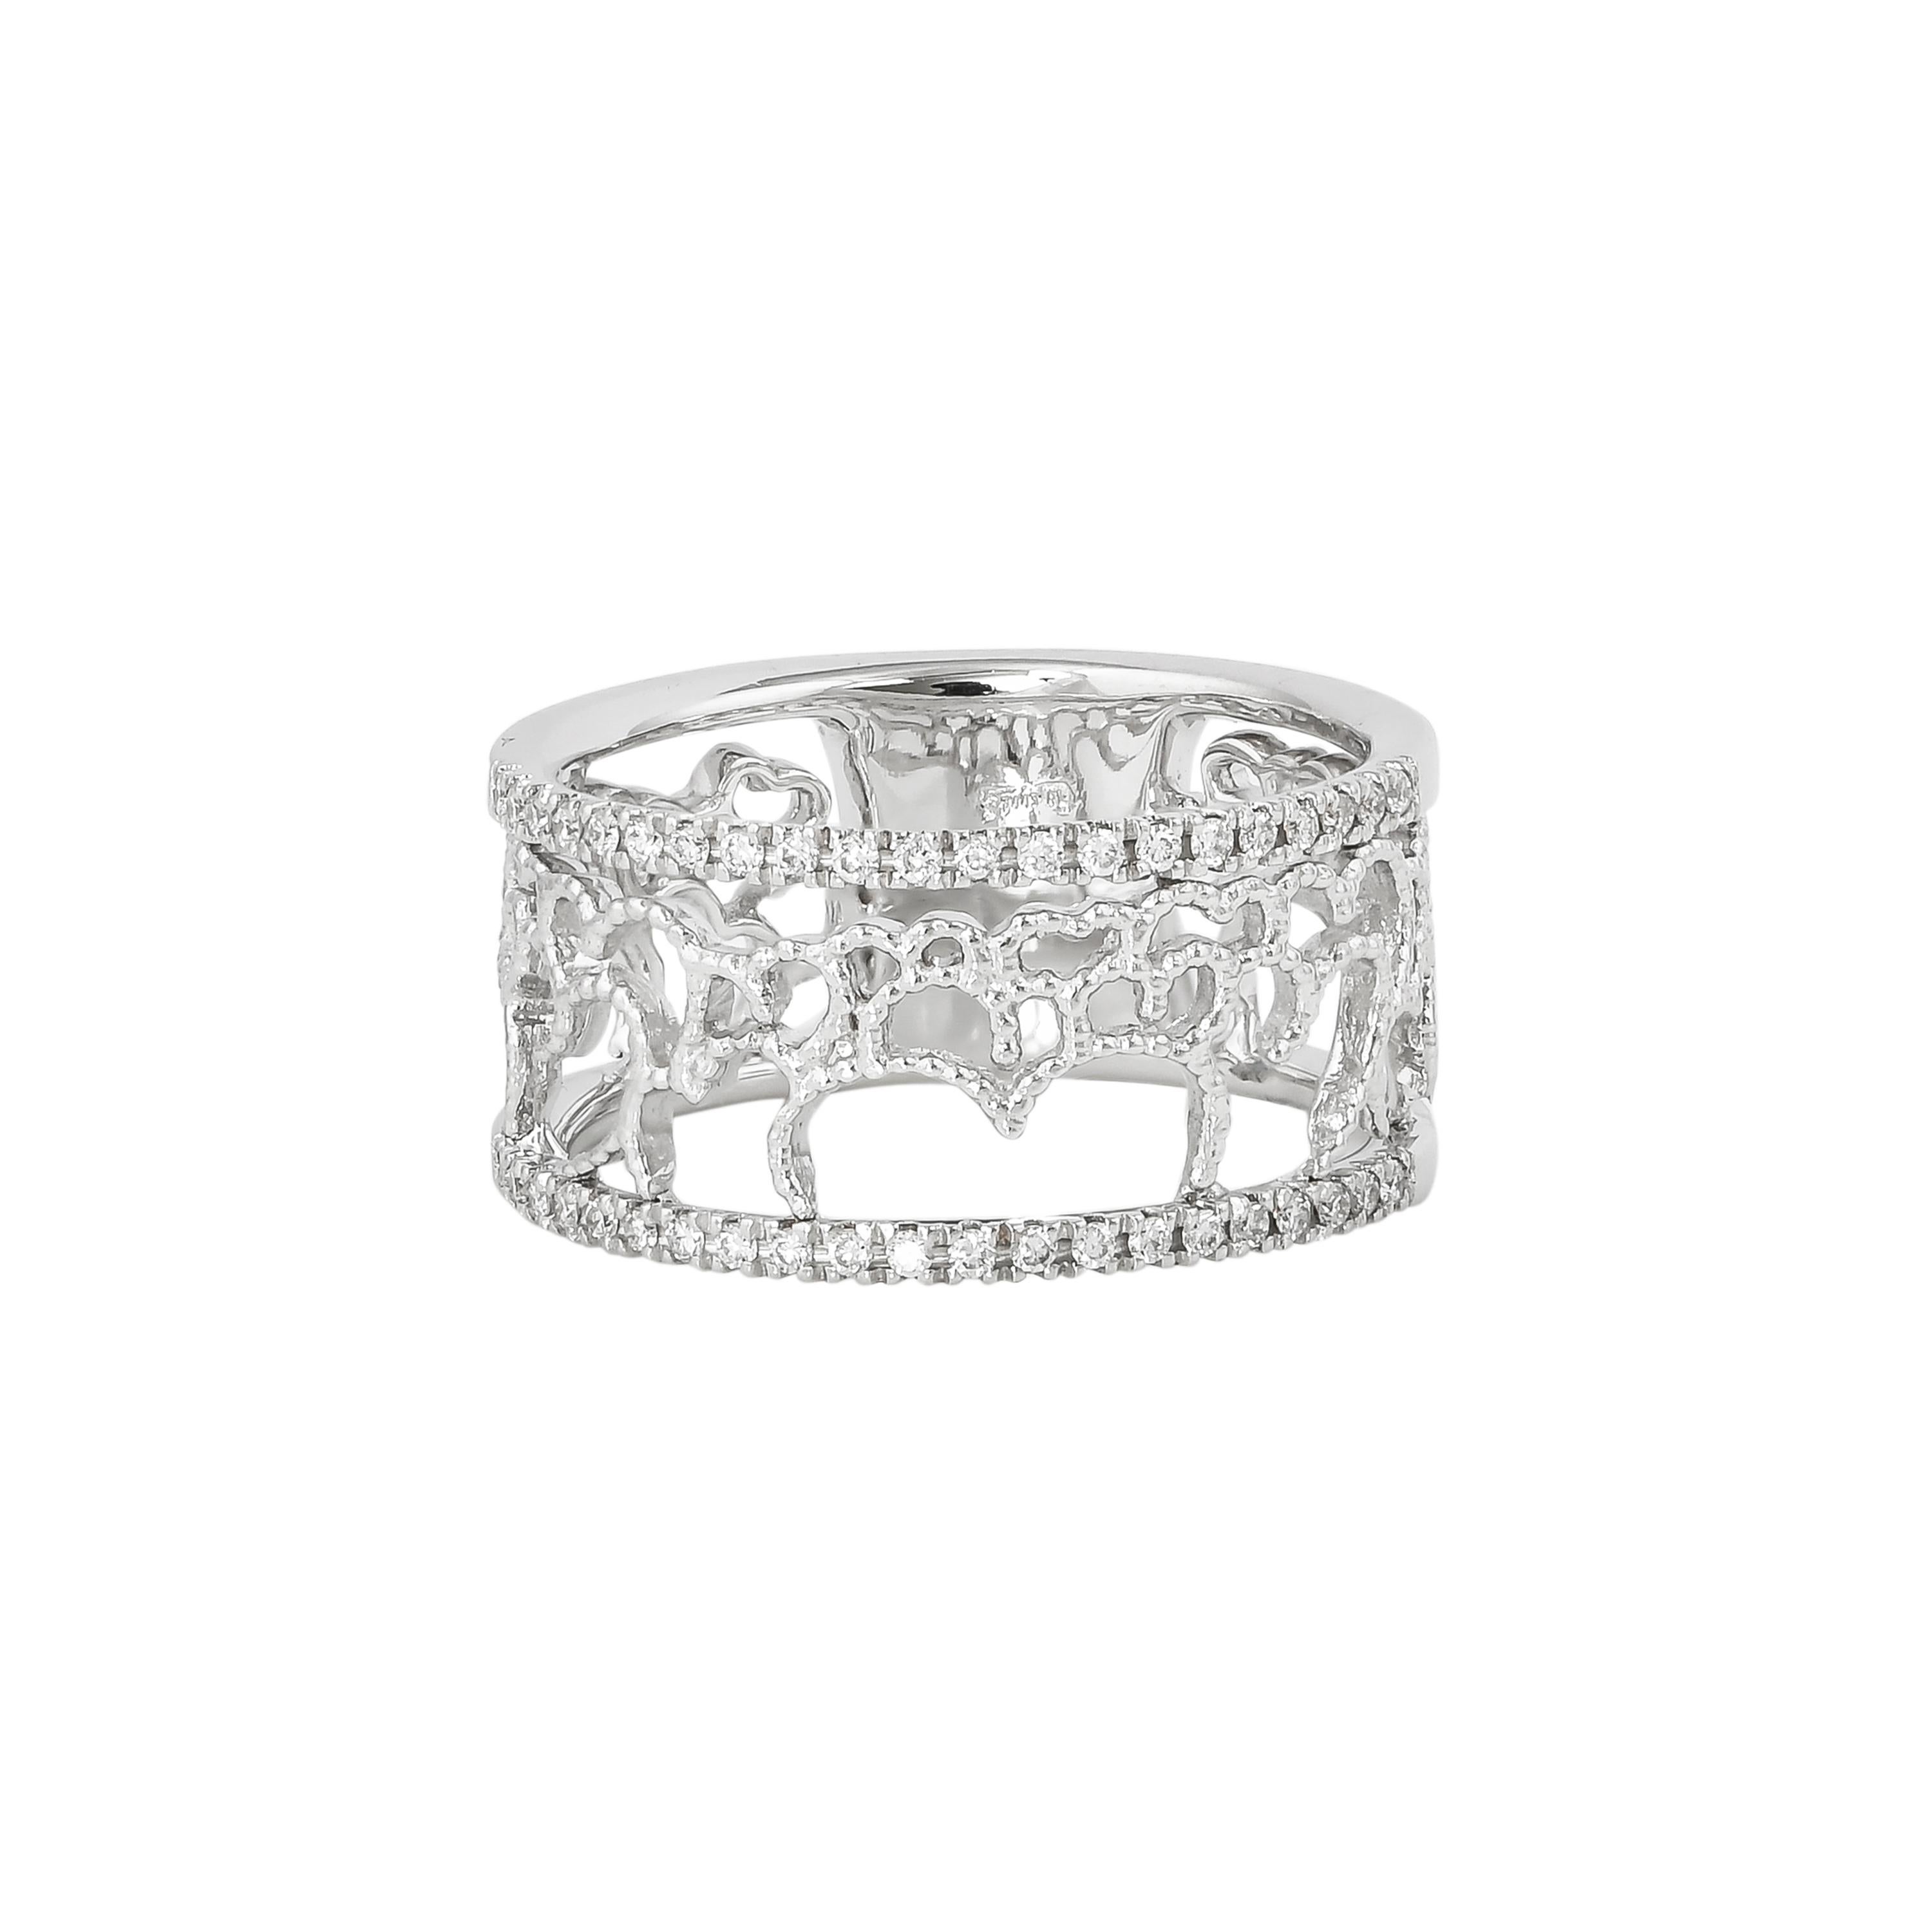 Round Cut 0.175 Carat Diamond Ring in 18 Karat White Gold For Sale